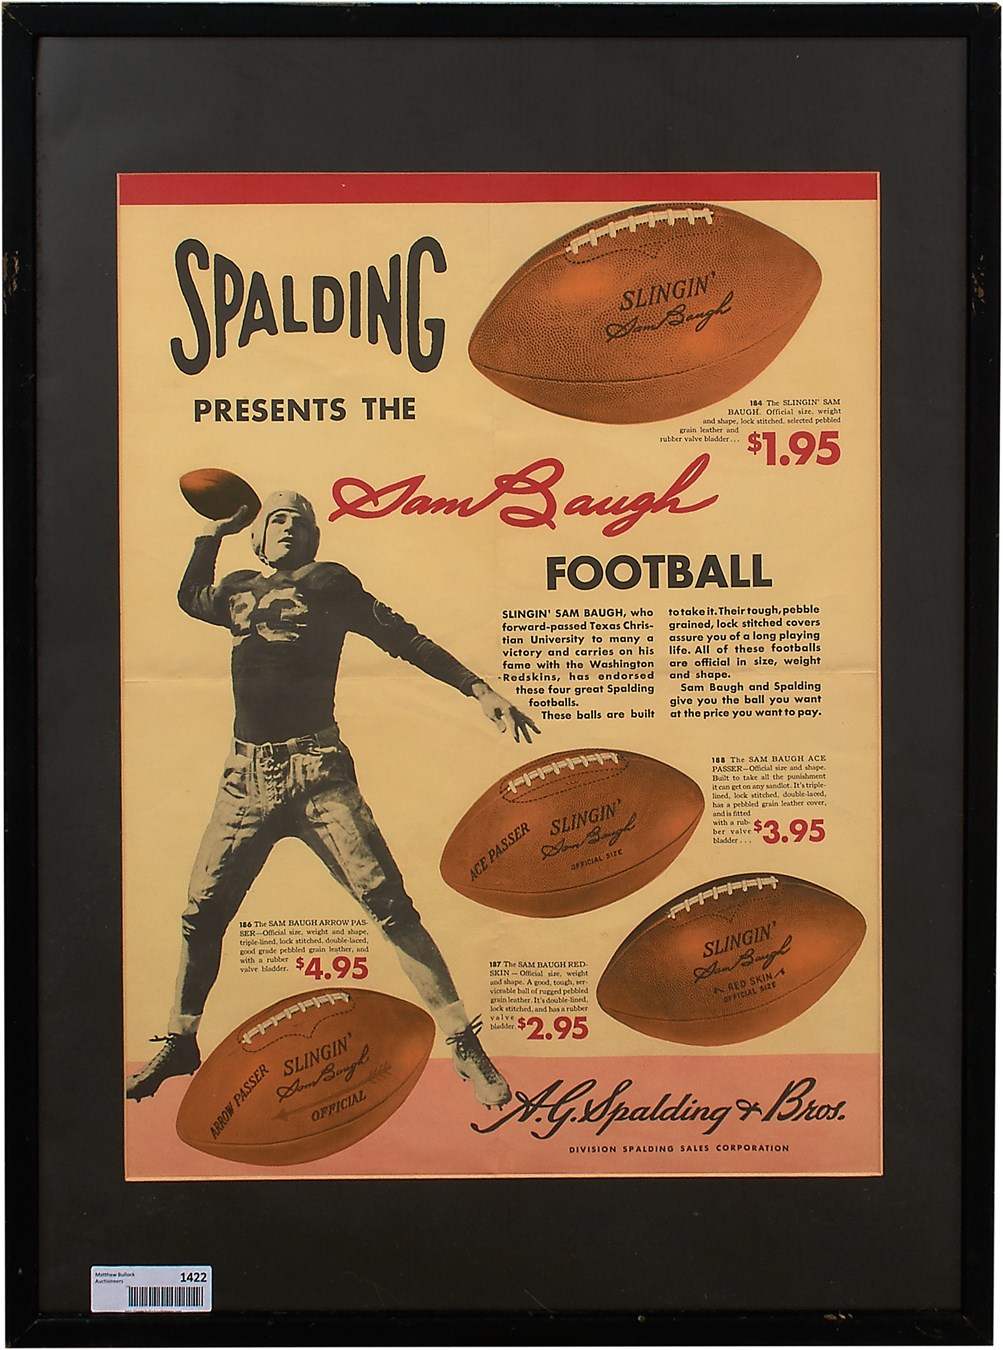 Football - 1940s Sammy Baugh Spalding Advertising Poster